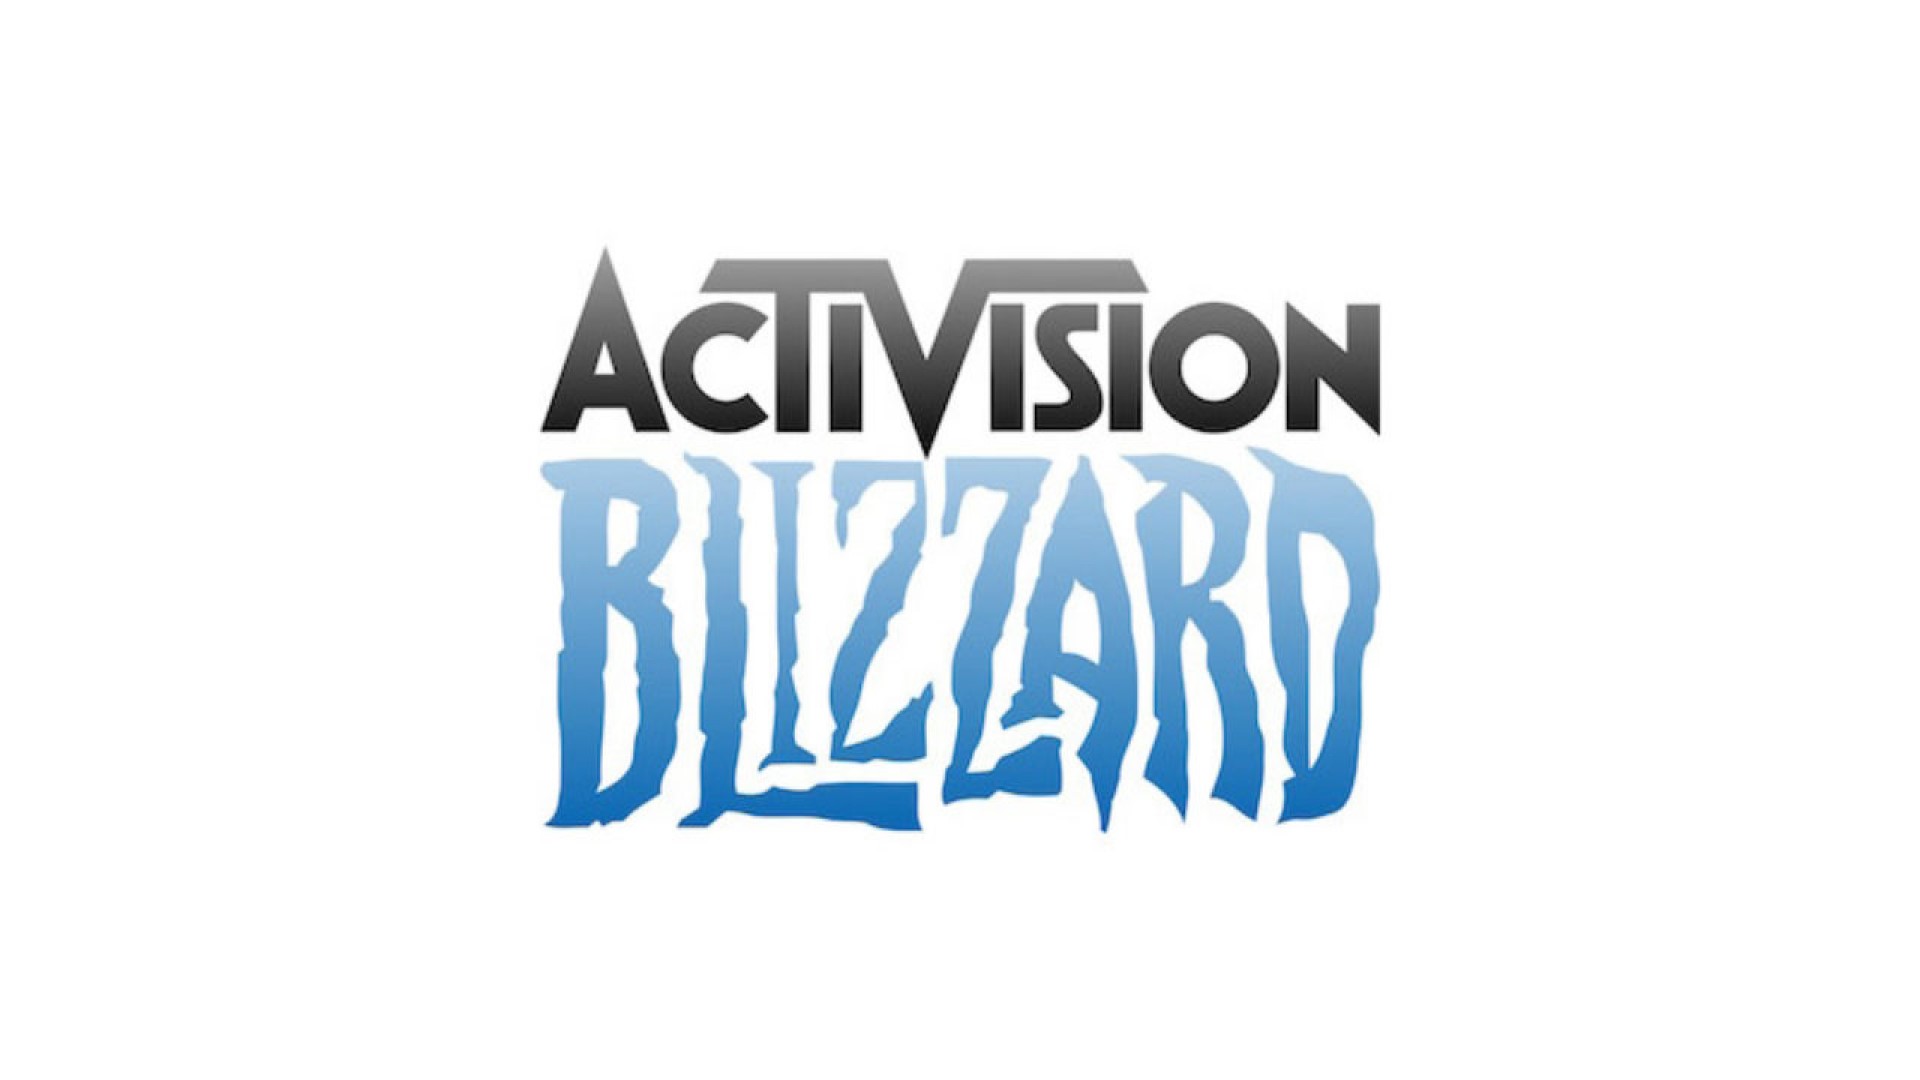 Activision Blizzard ทำเงินได้ 5.1 พันล้านดอลลาร์จากการขาย DLC และระบบเติมเงินในเกมตลอดทั้งปี 2021